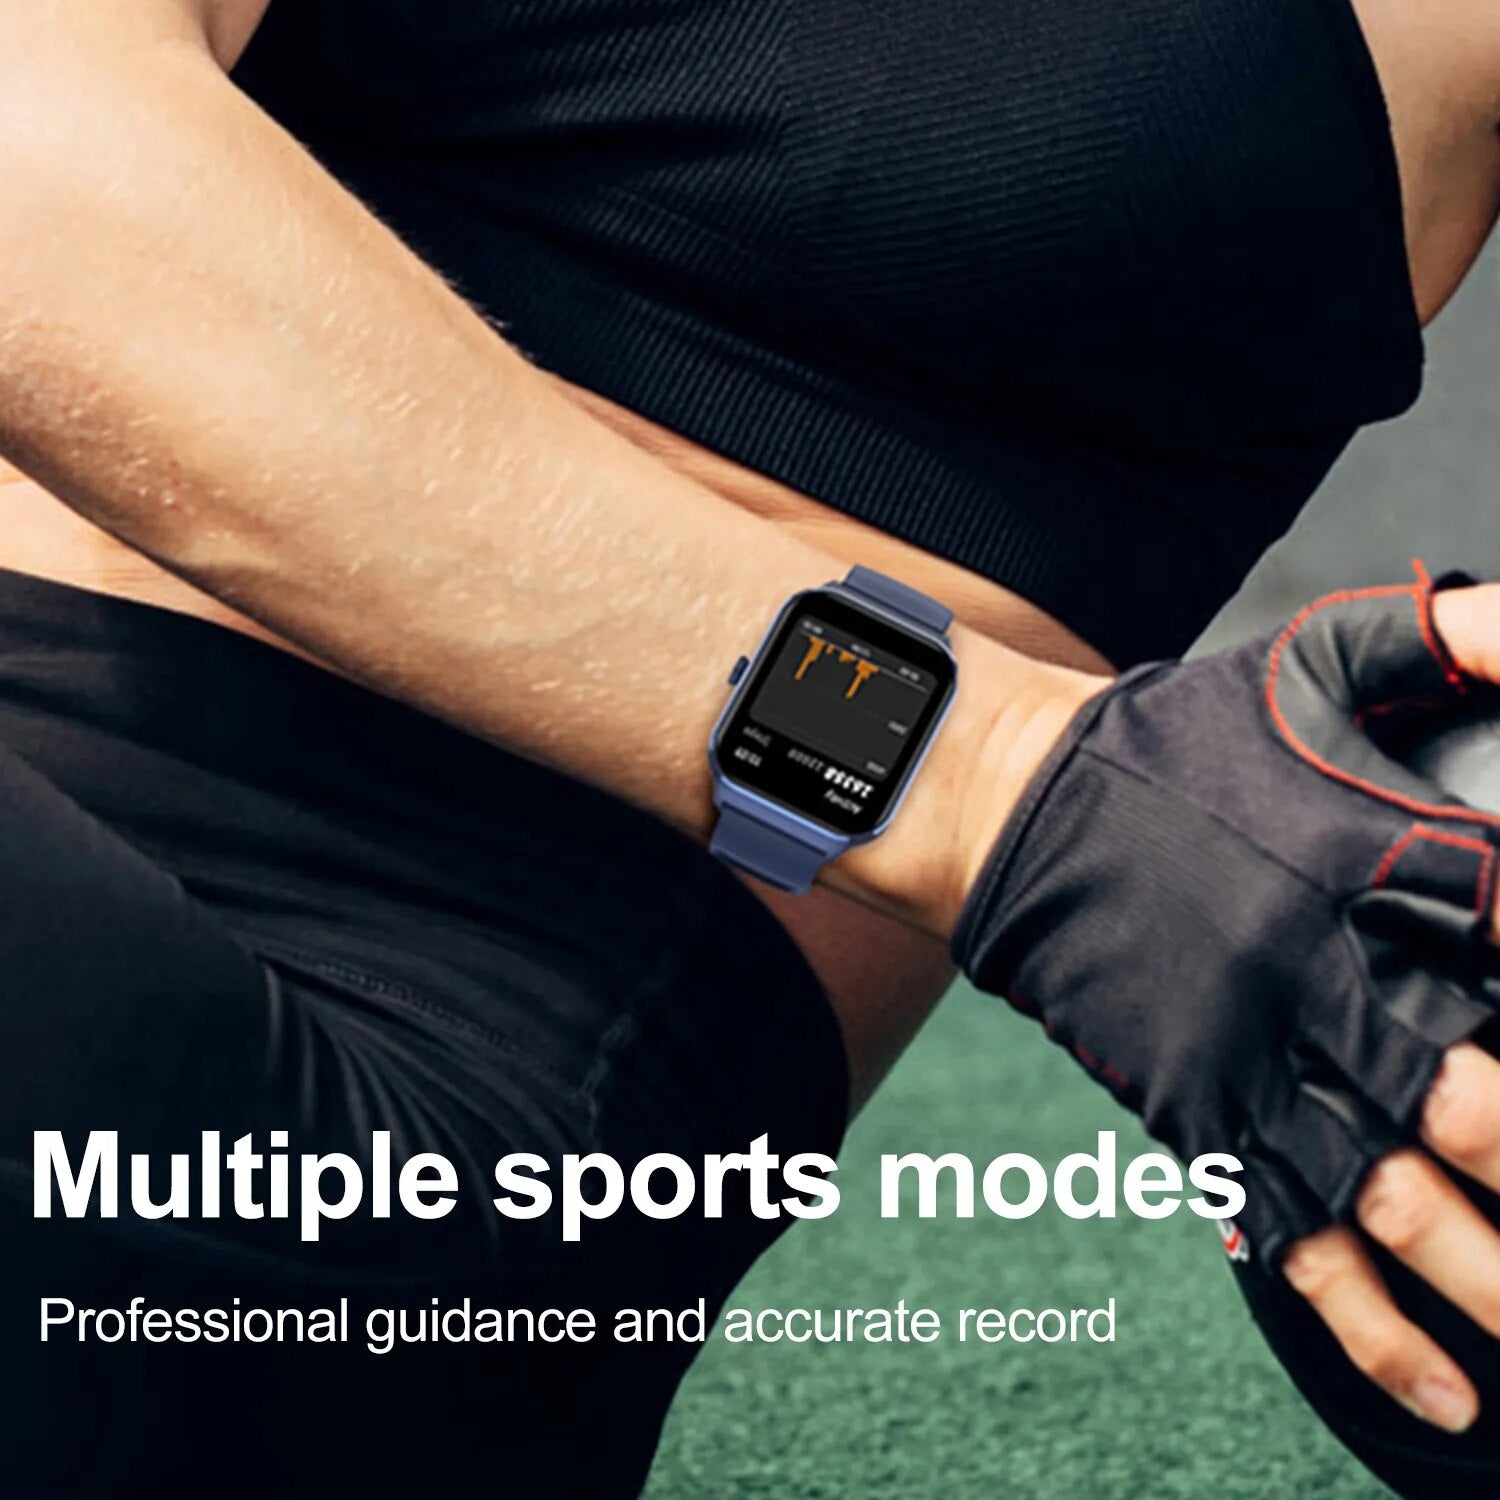 Fitness Tracker Watch | P60 Smart Watch | ElectoWatch